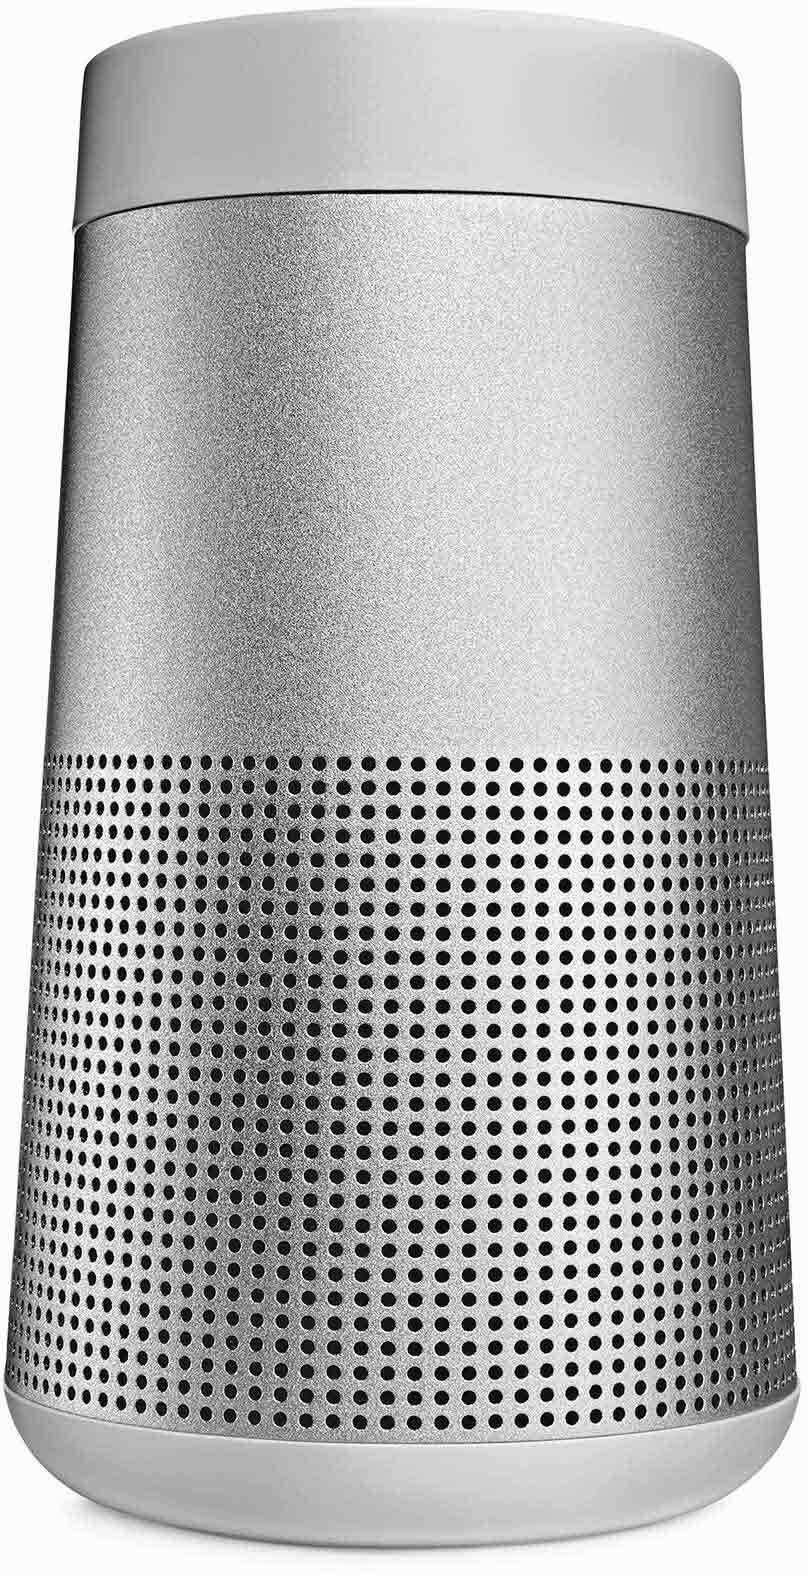 Bose SoundLink Revolve II Portable Bluetooth Speaker Silver